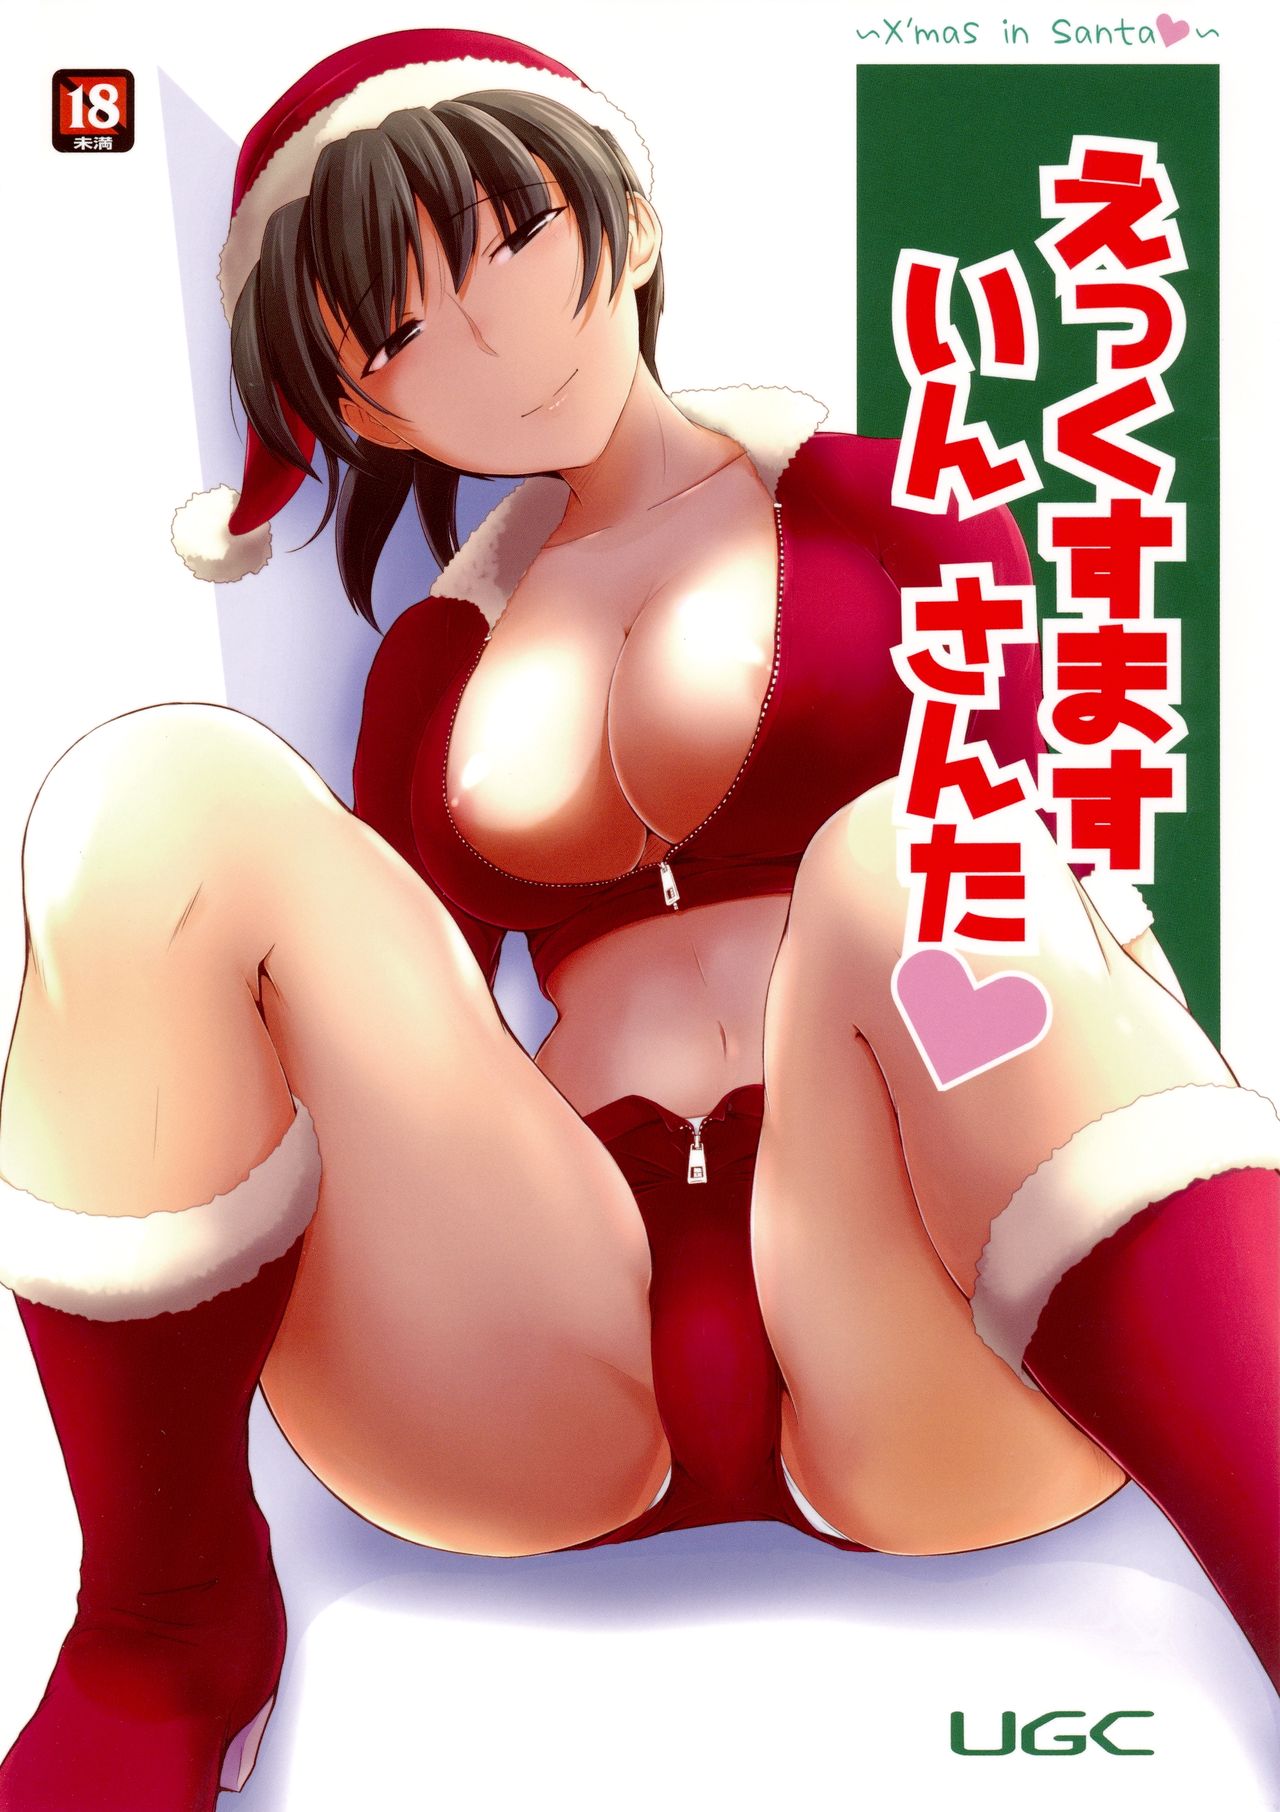 Sasaki Akira - X' mas in Santa Hentai Comic